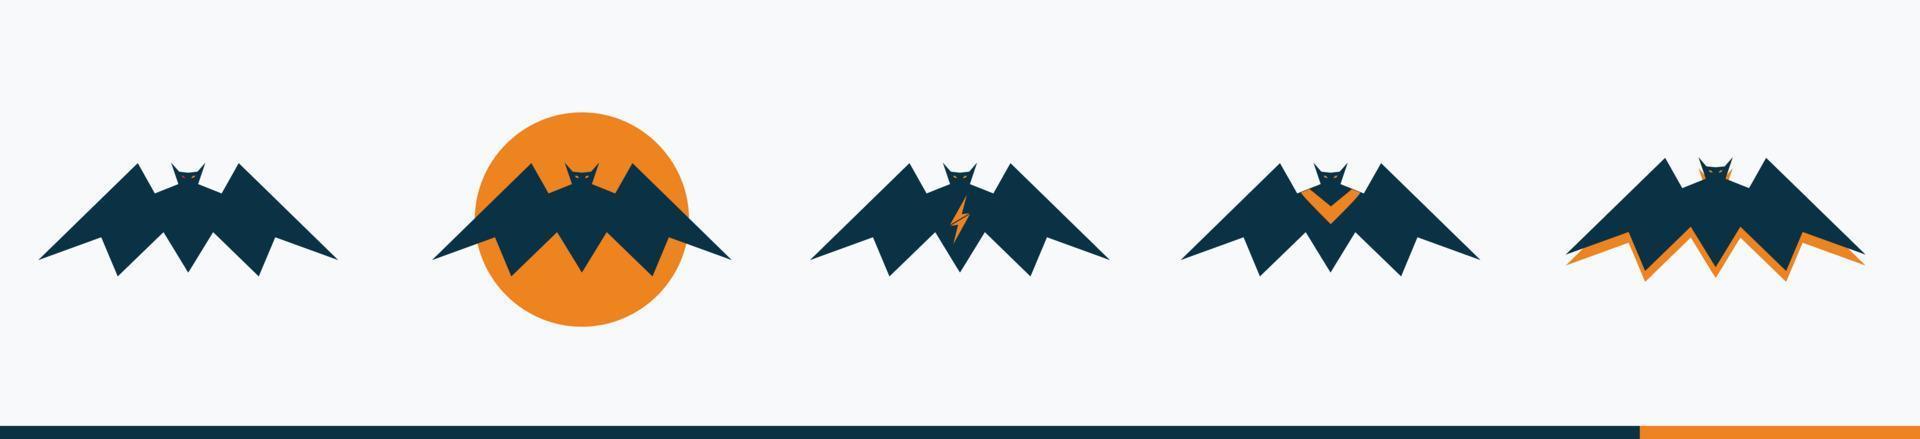 evil bats set logo icon isolated on white background vector